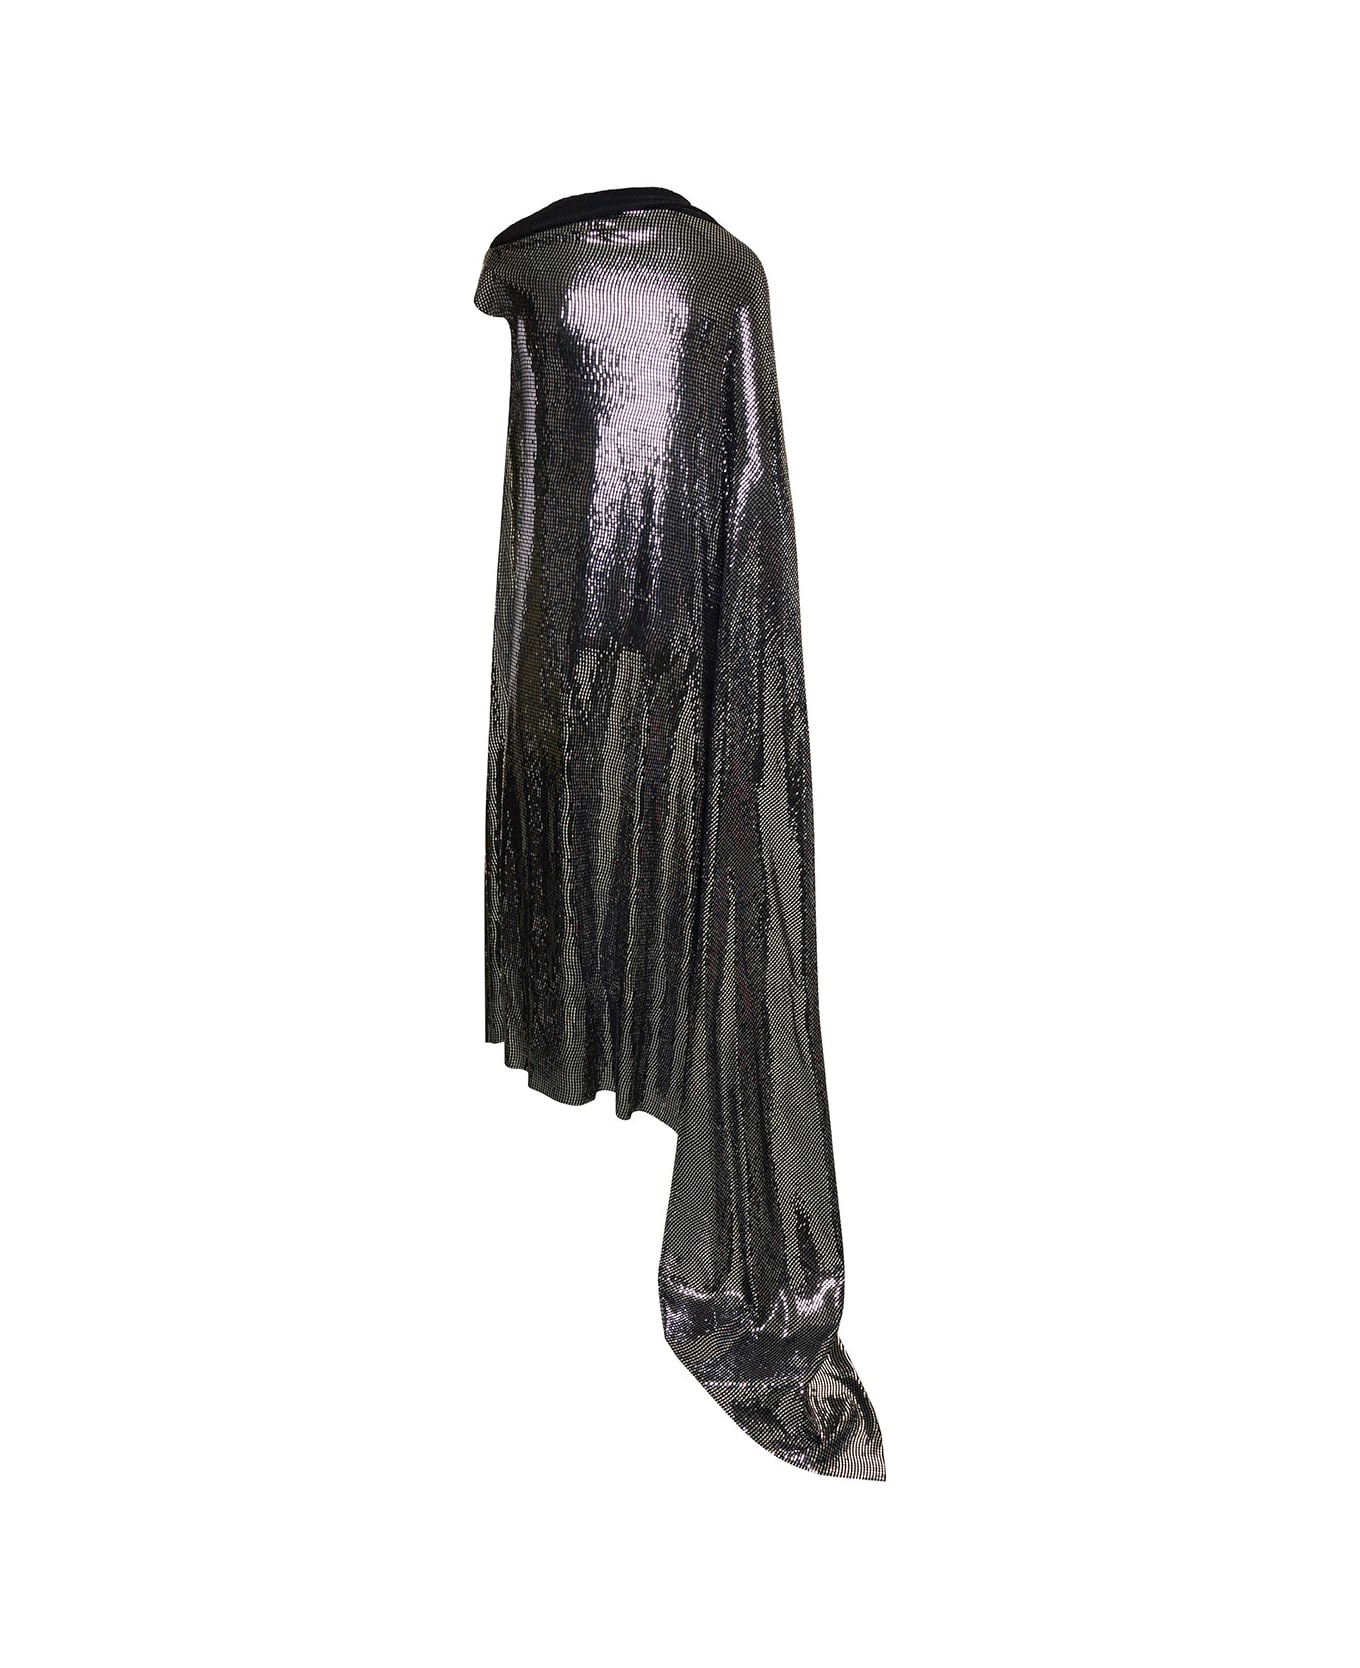 Balenciaga 'minimal' Black And Silver Draped Sleeveless Gown In Metallic Jersey Woman - Black